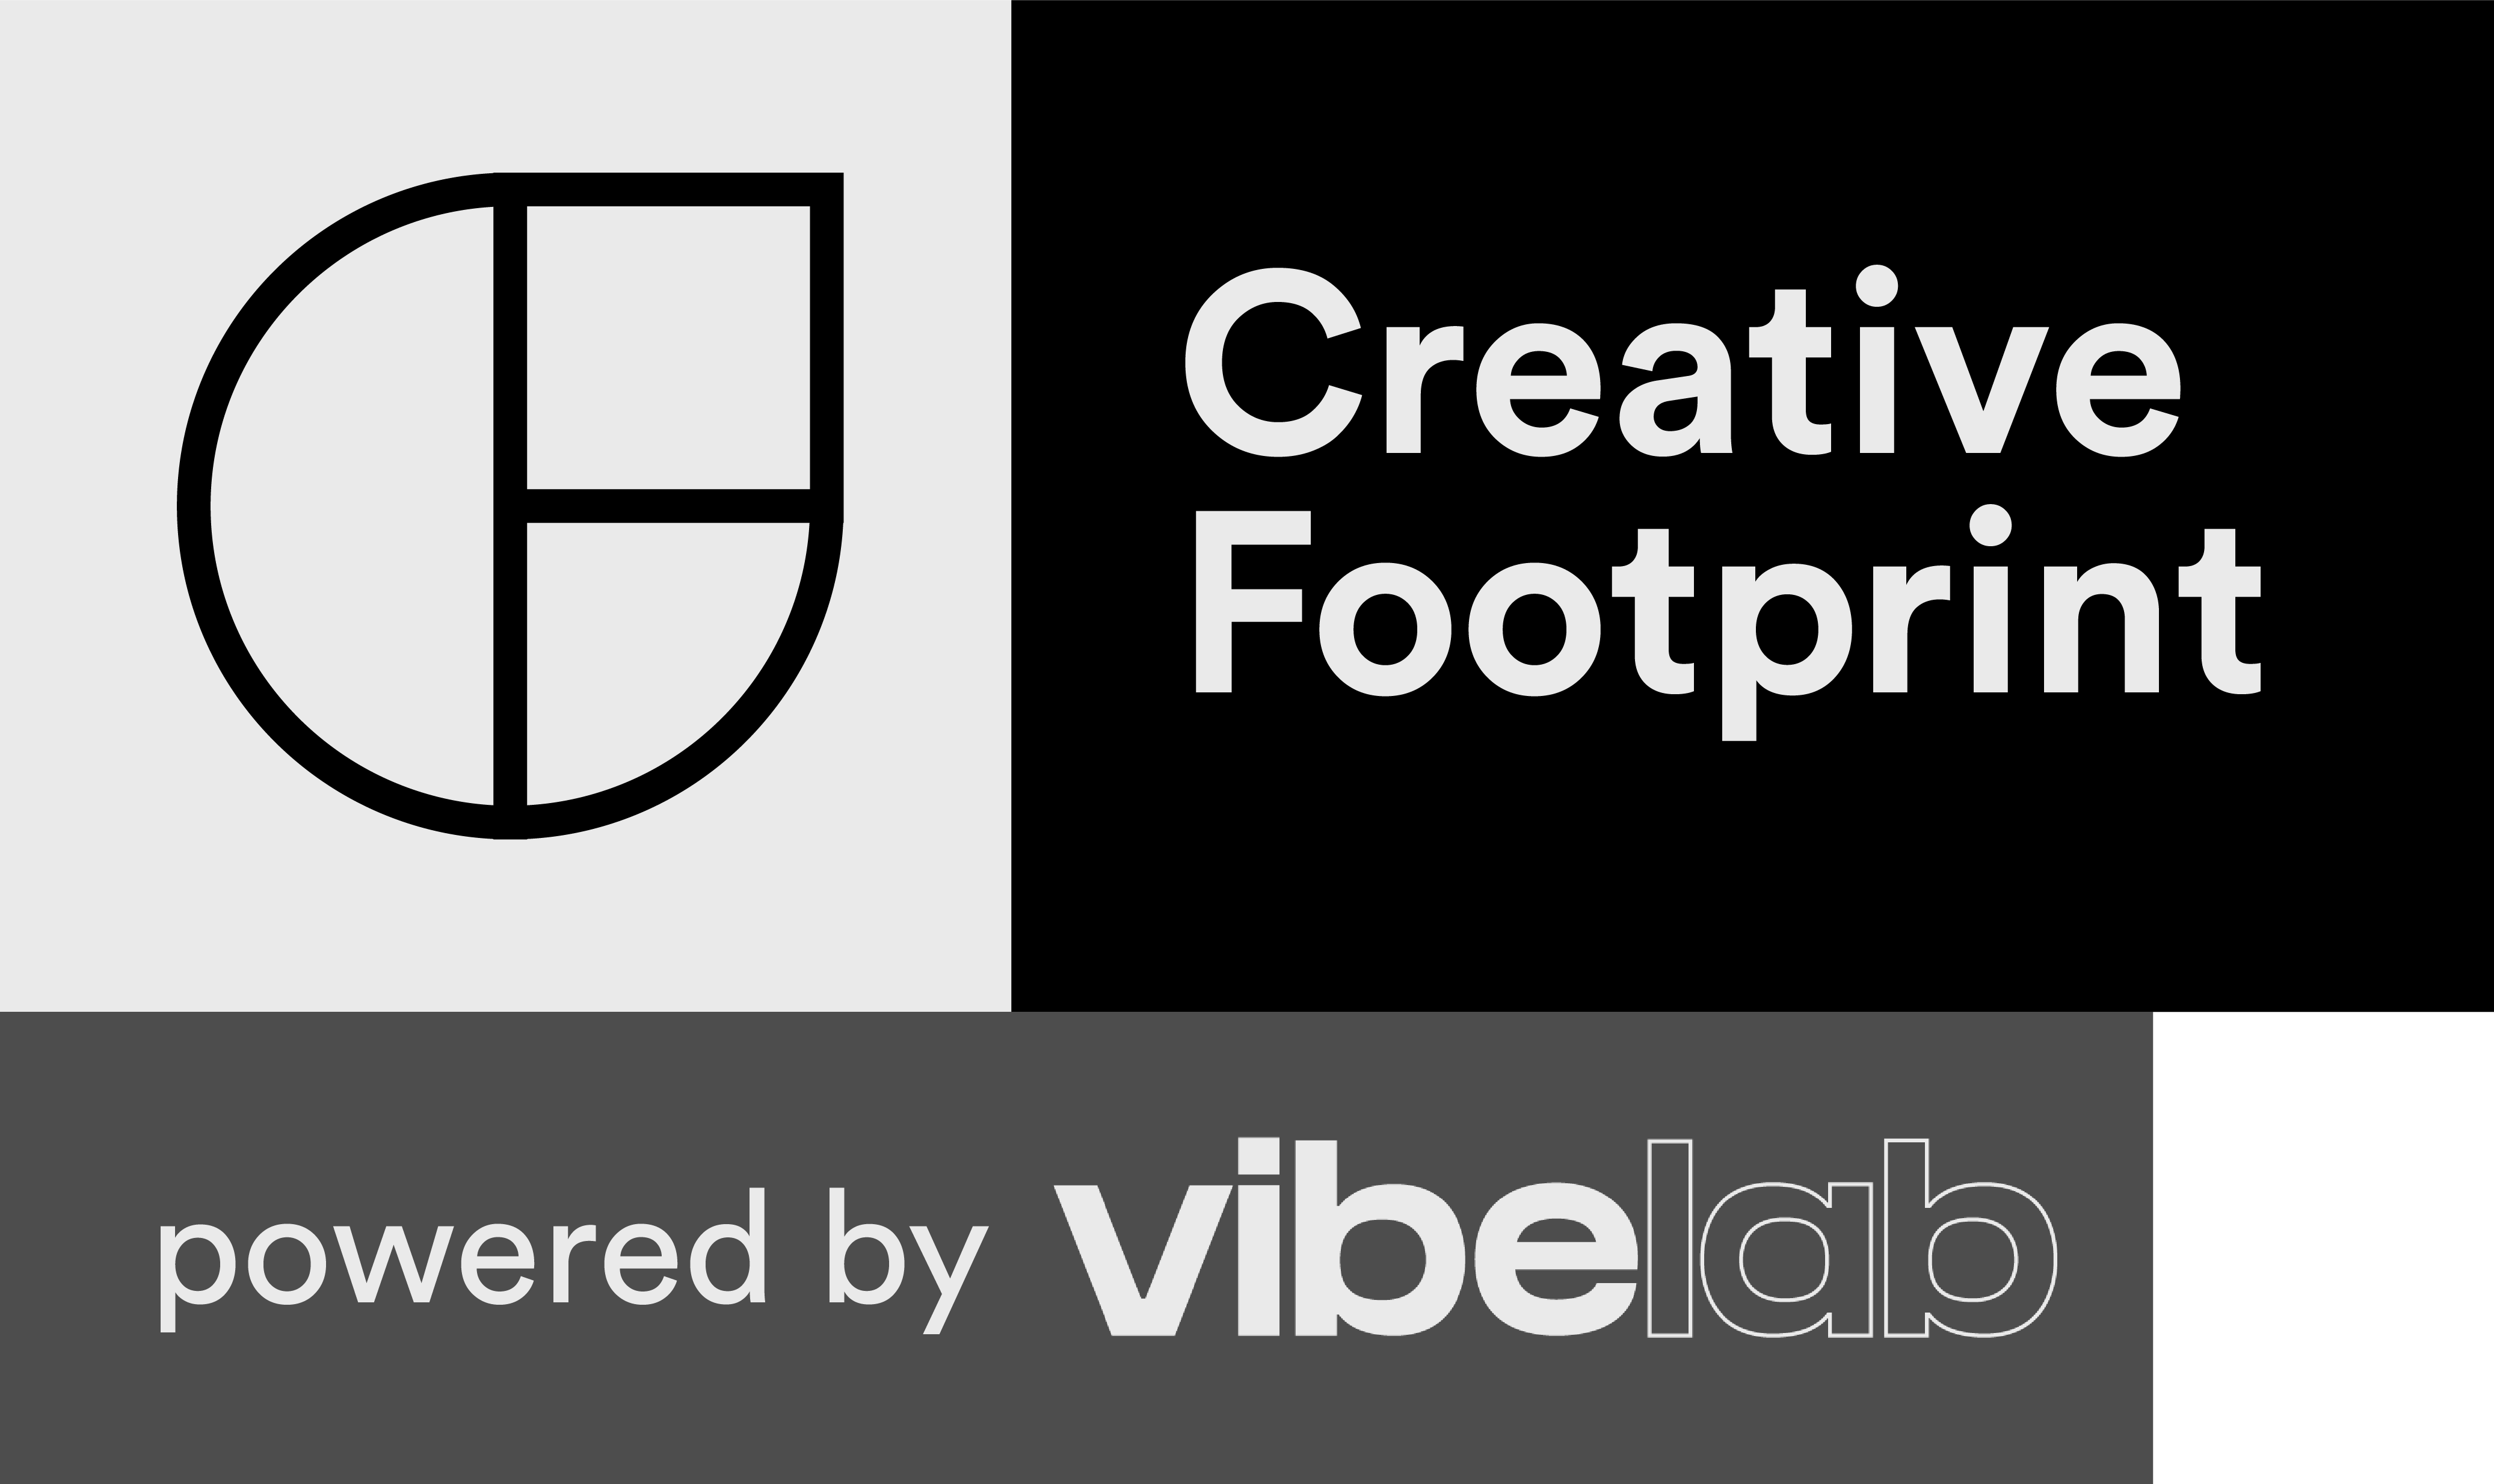 Creative Footprint